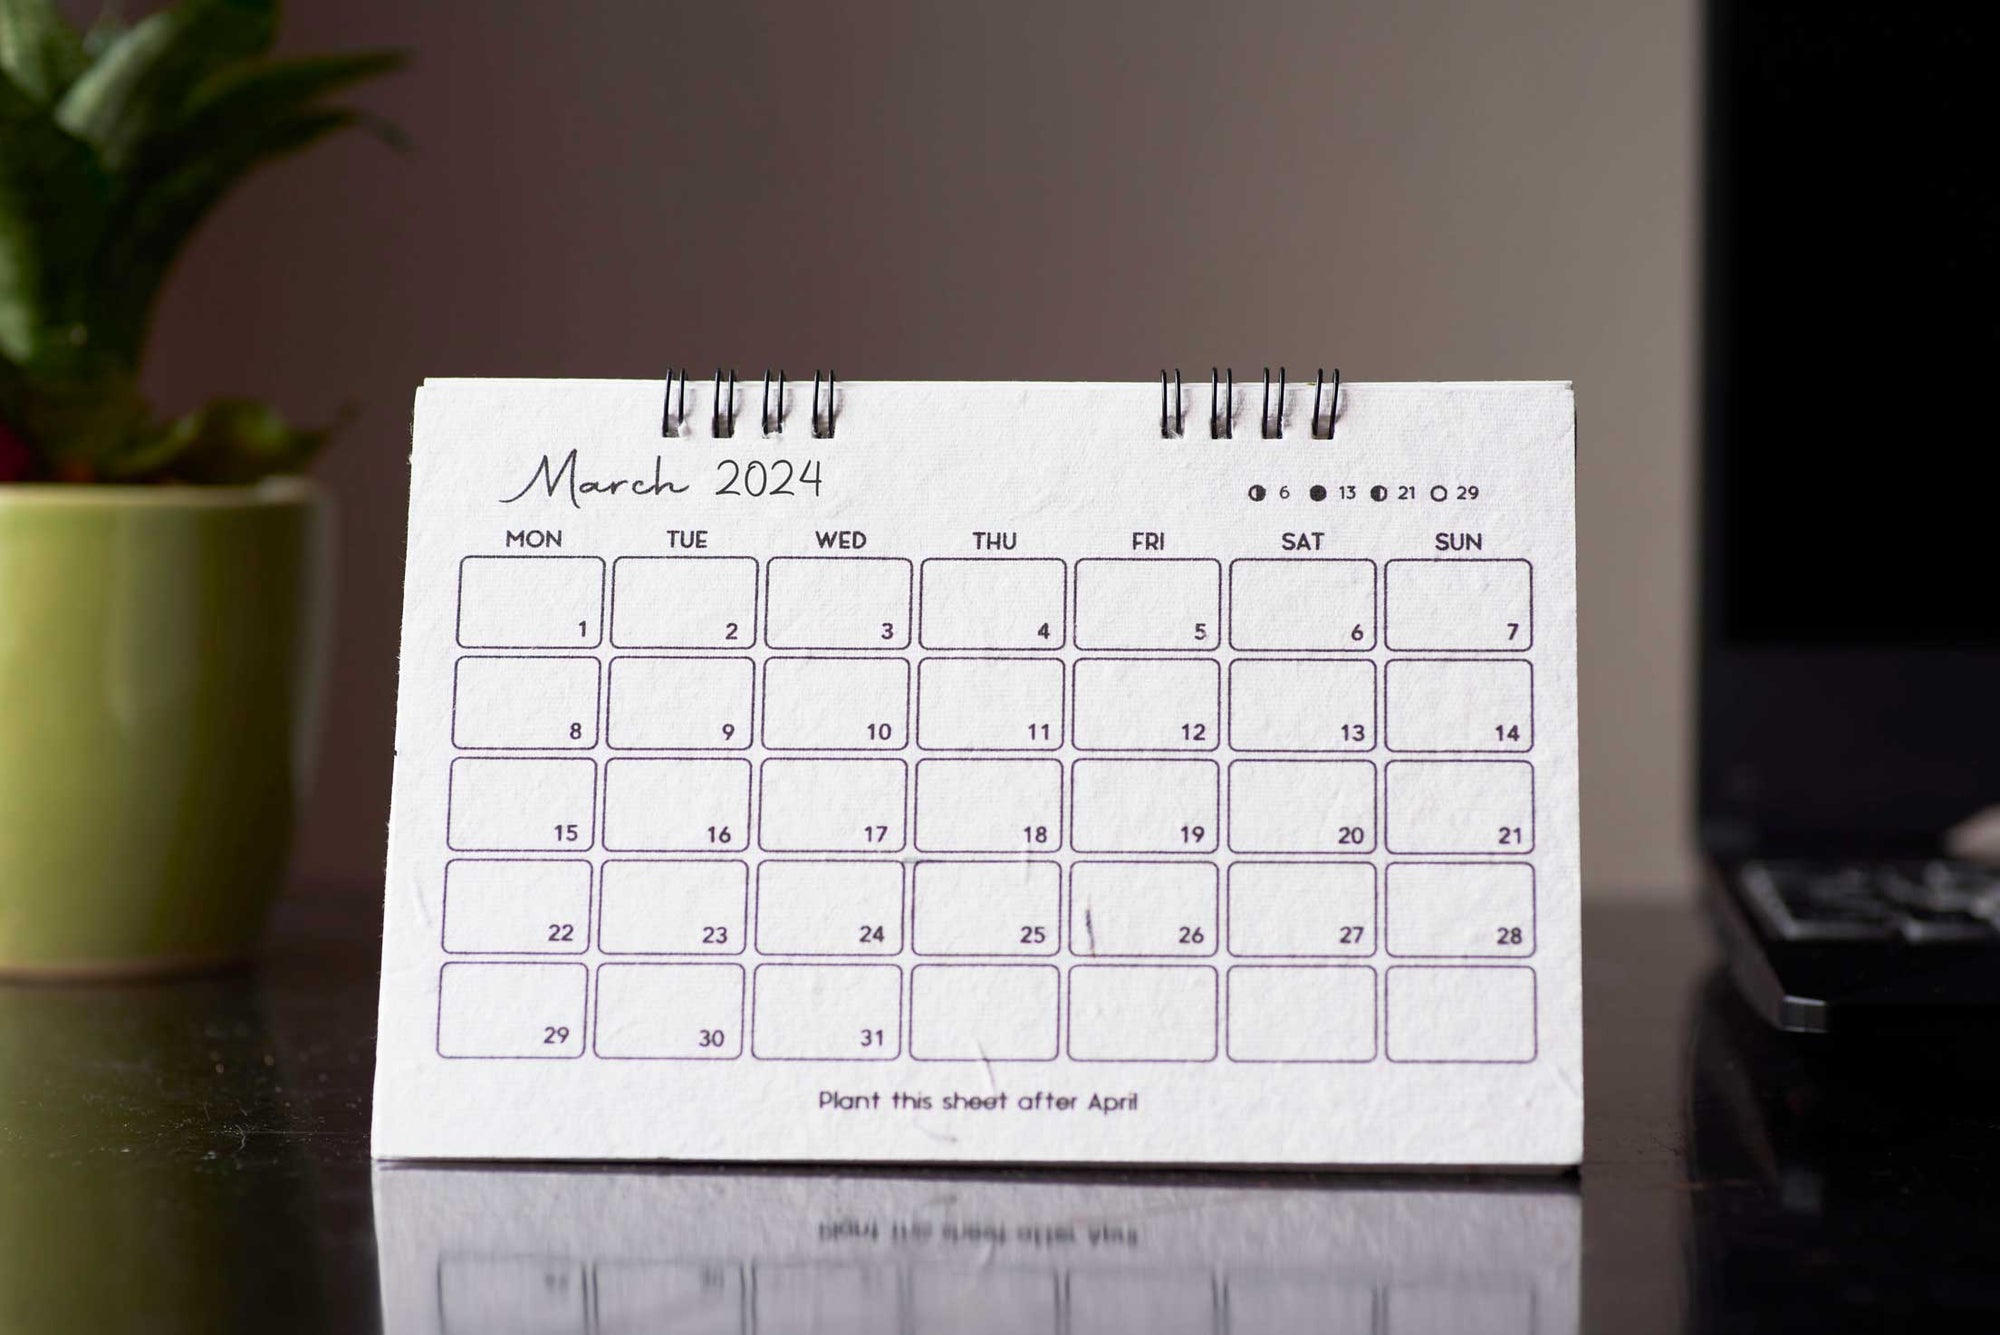 The Minimalist | Plantables Planner-Calendar 2024